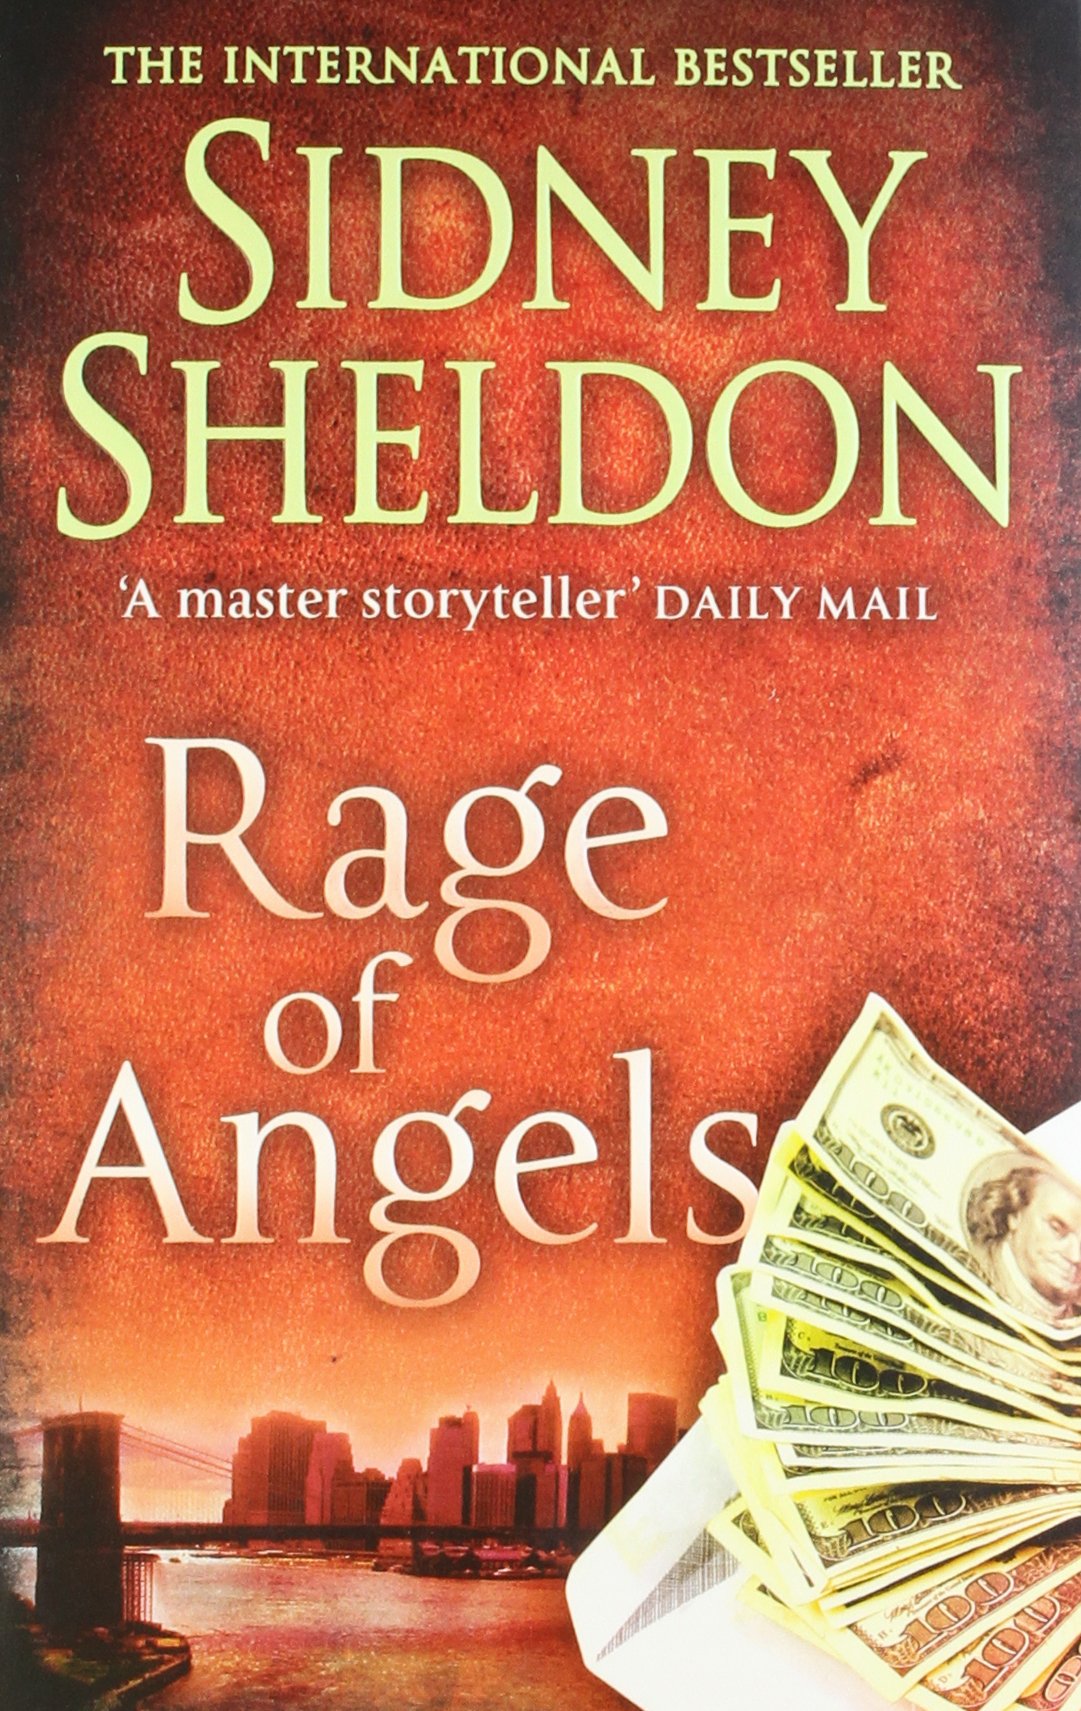 Rage of Angels - Paperback